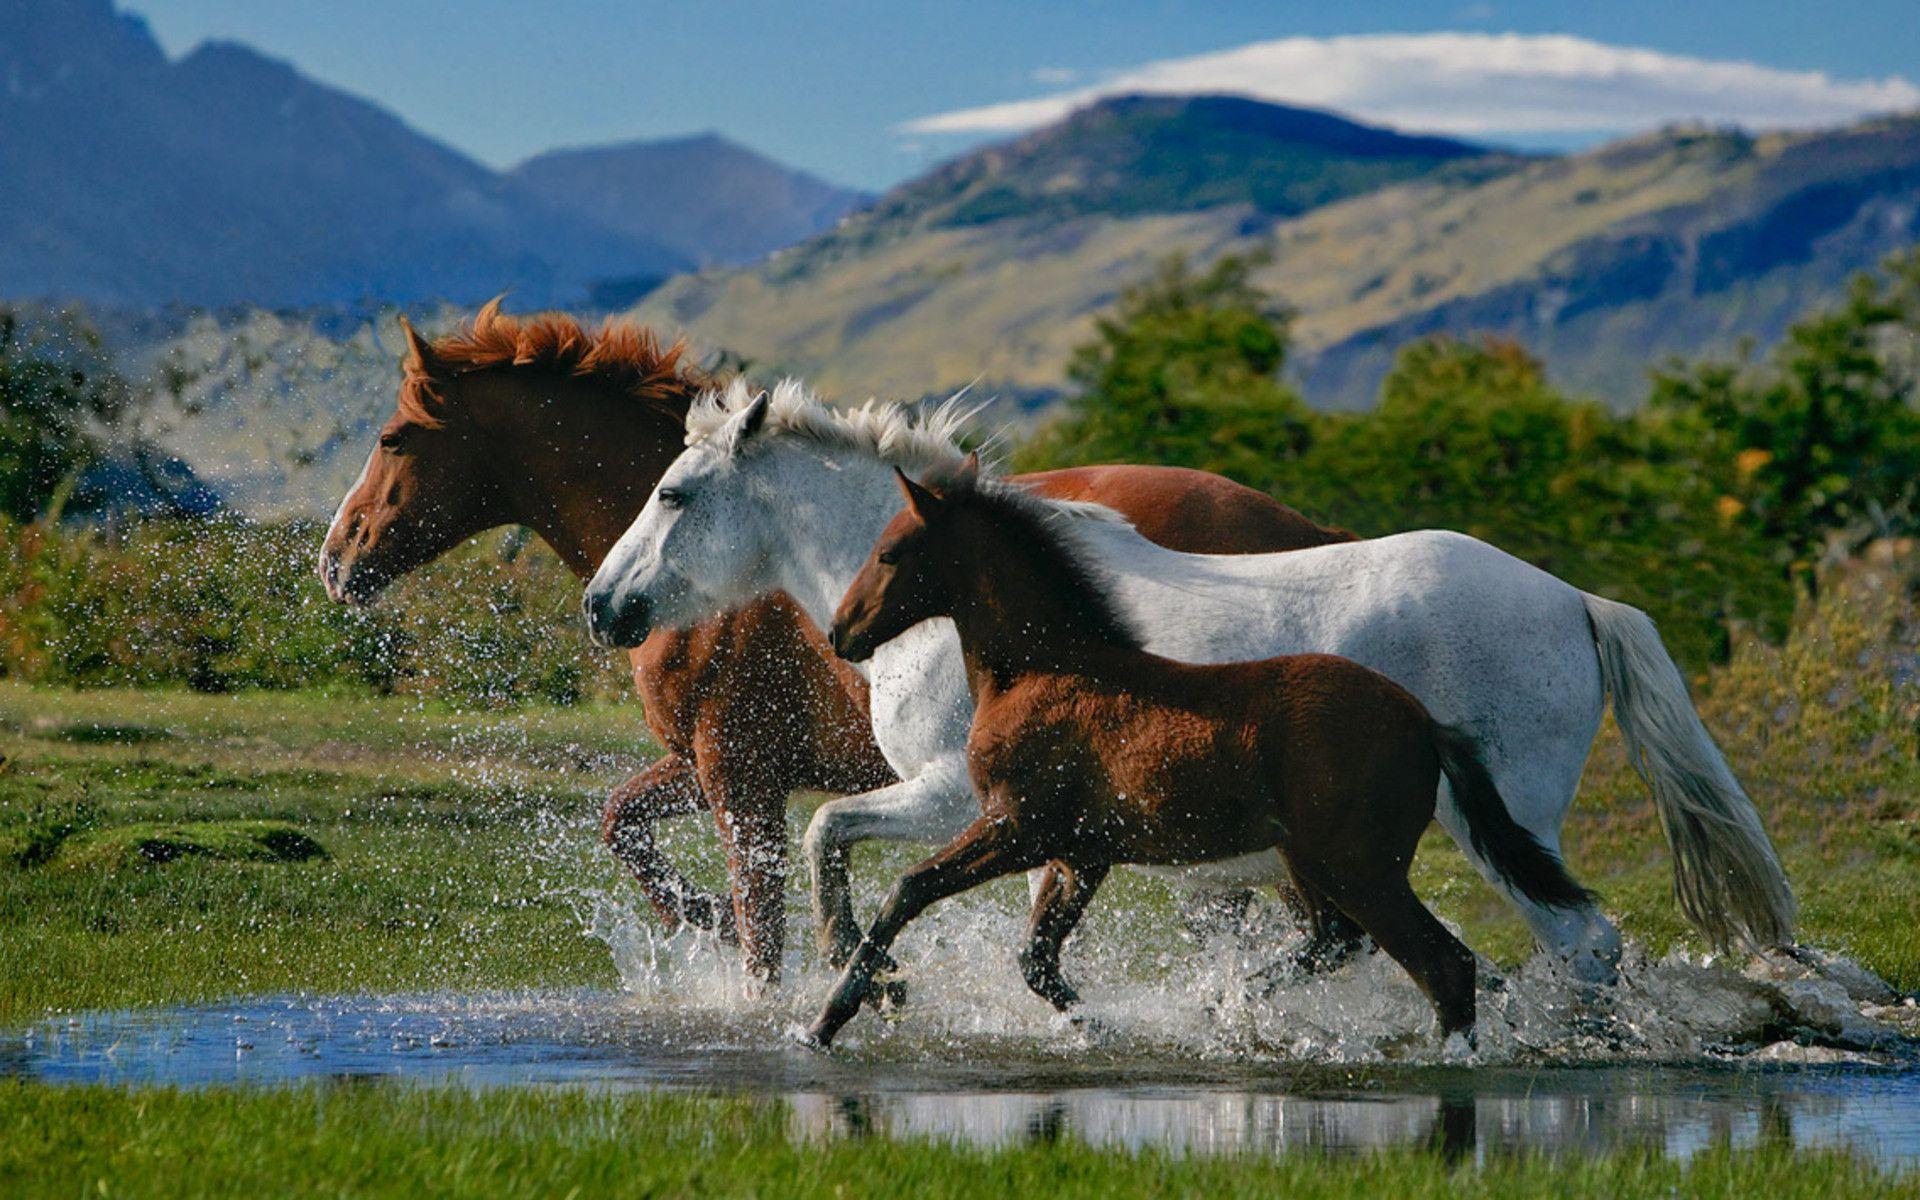 Beautiful Horse DesktopWallpapers